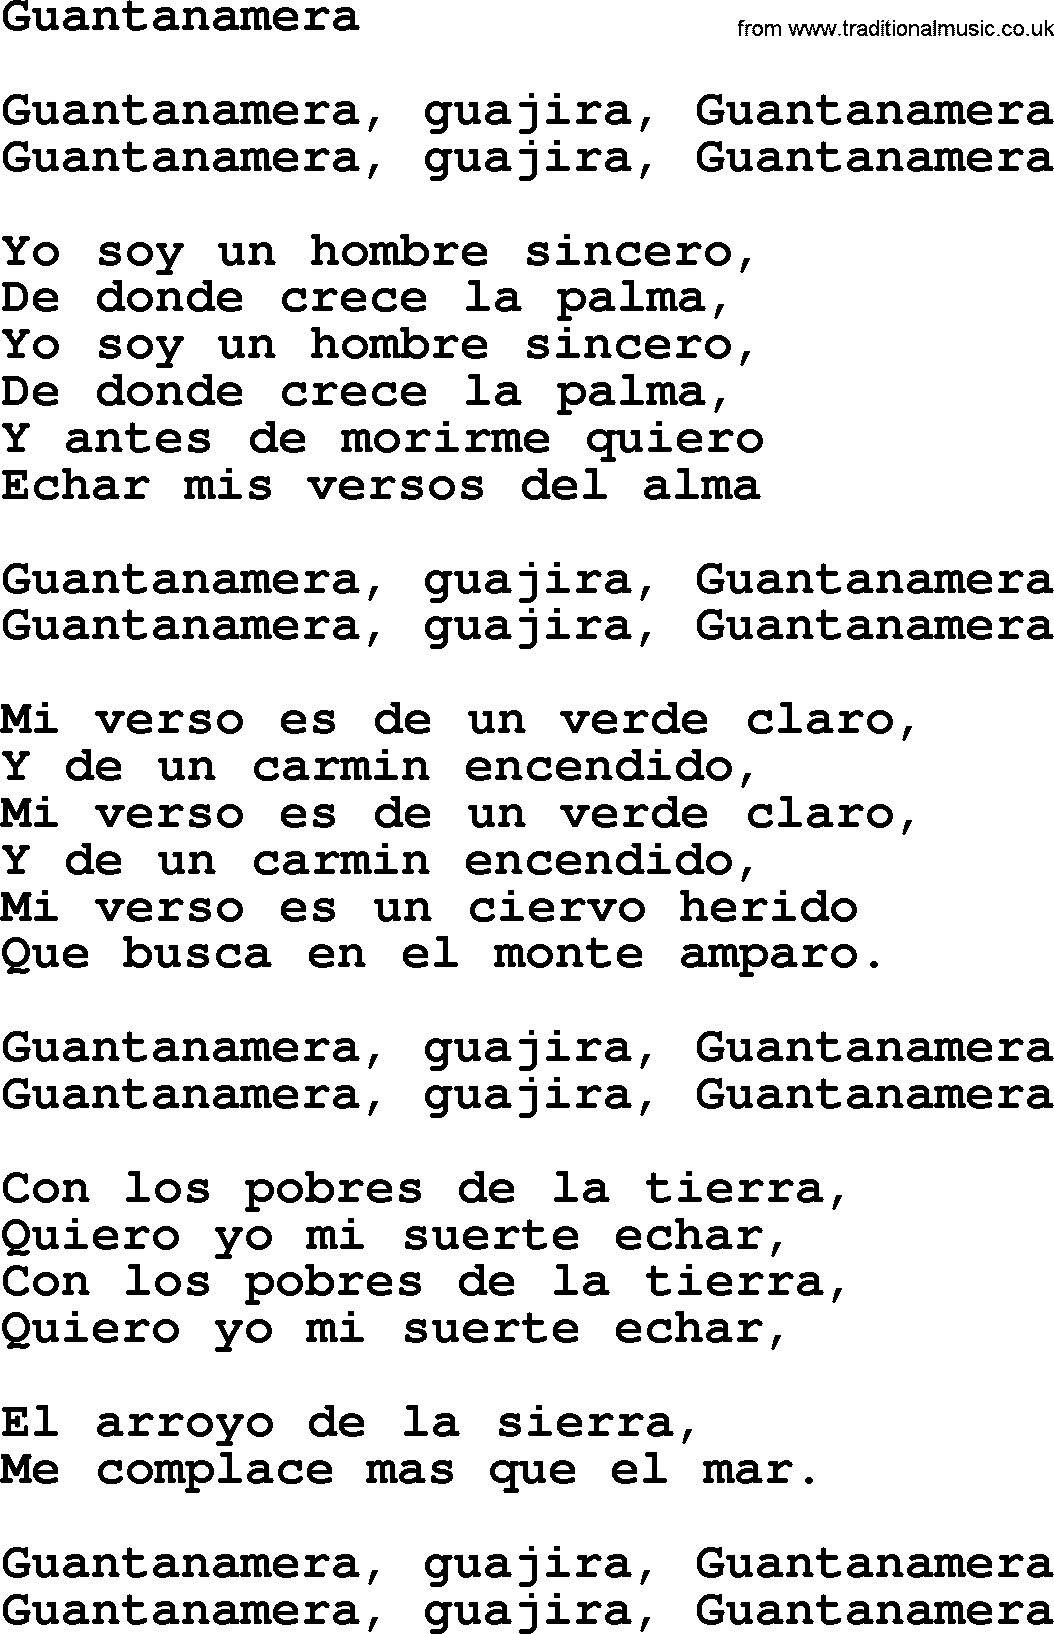 Гуантанамера перевод песни